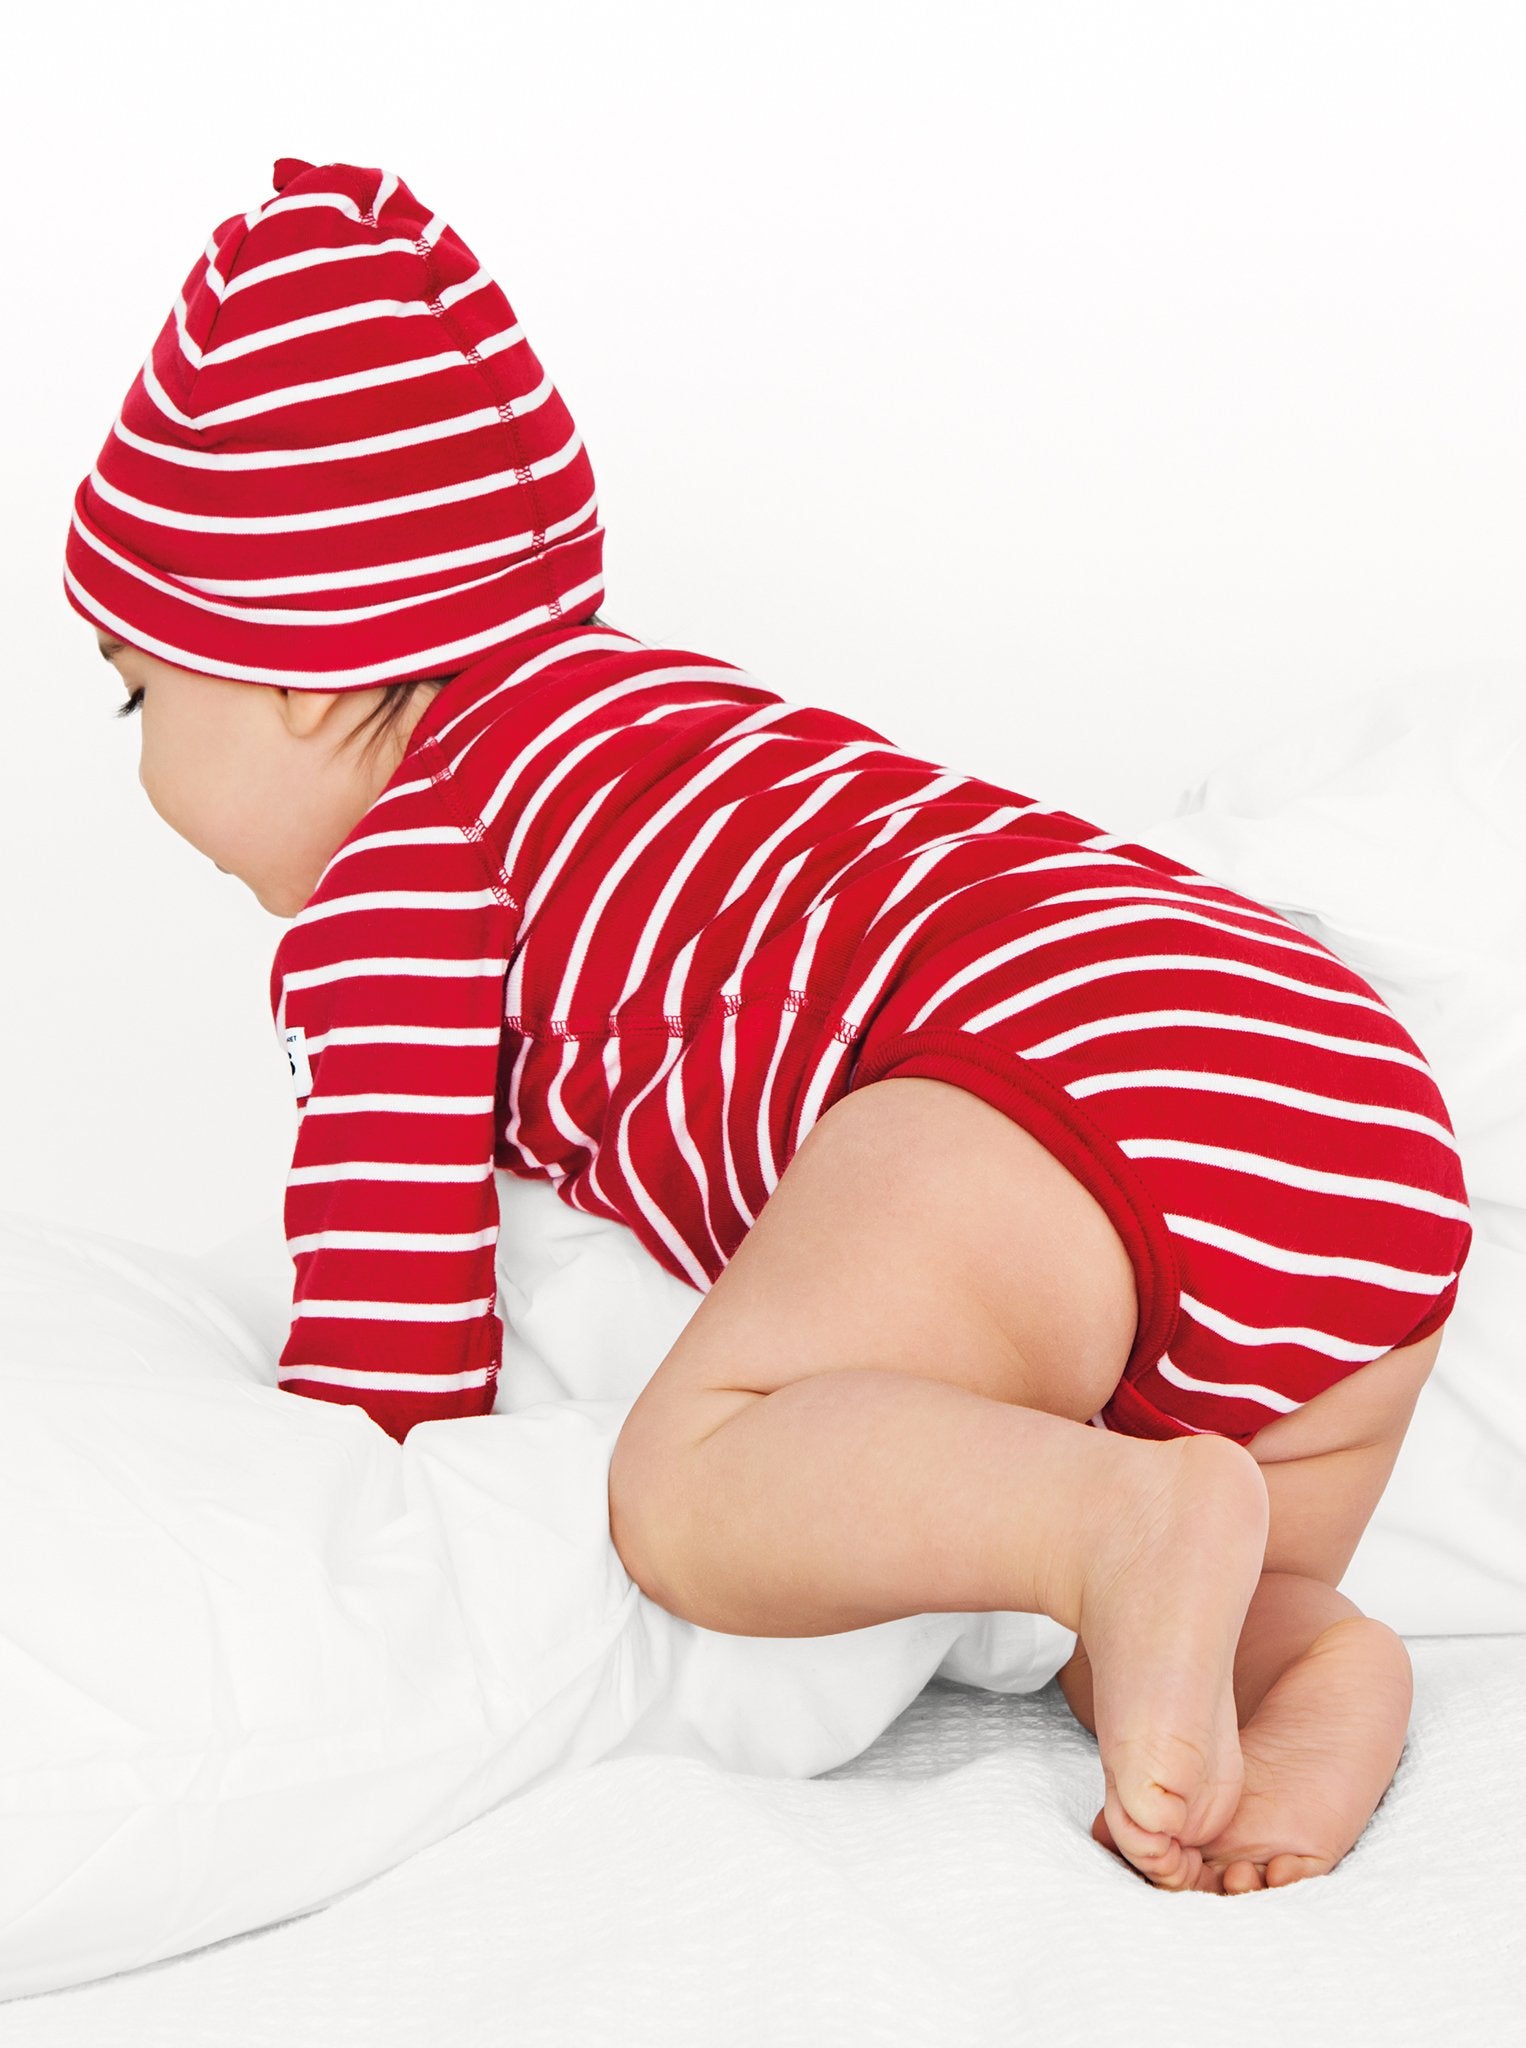 newborn babygrow red stripes, ethical quality organic cotton, polarn o. pyret classic